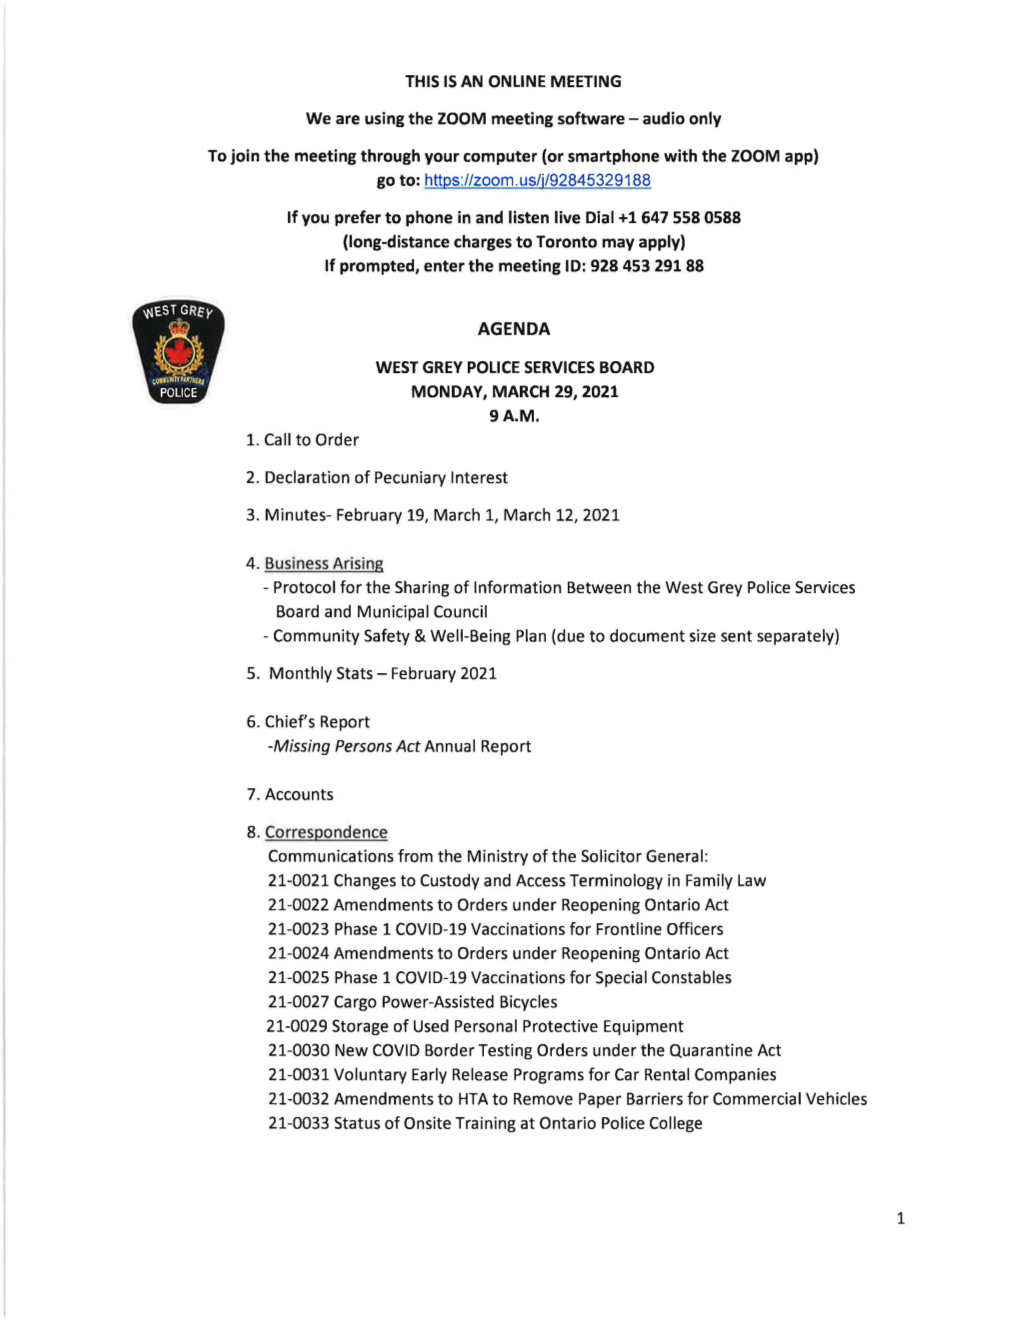 West Grey Police Services Board Agenda, March 29 2021